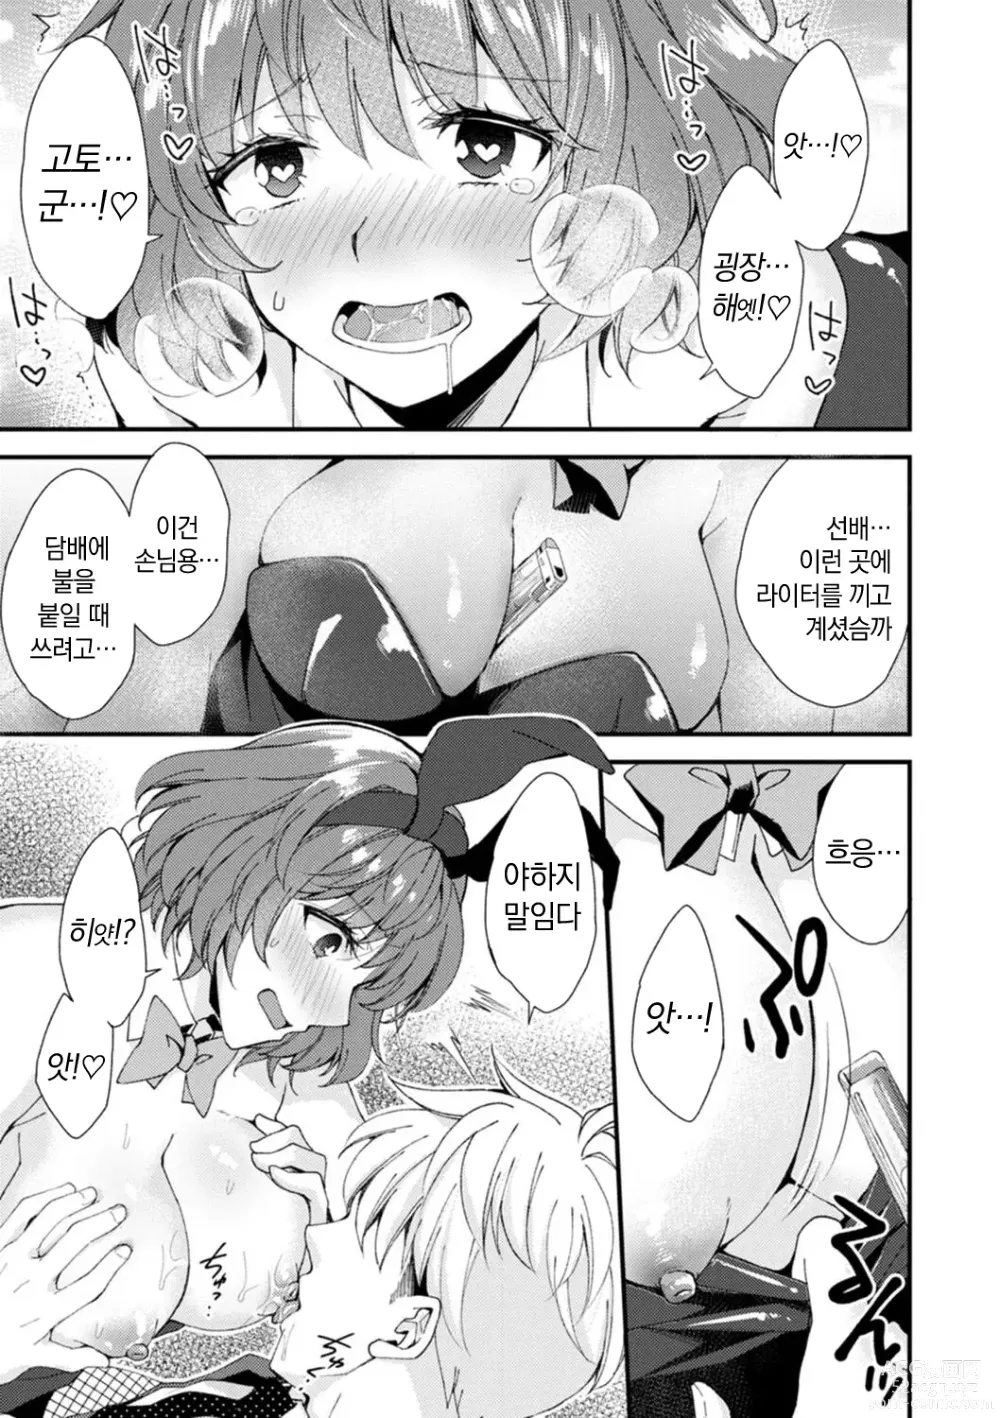 Page 17 of manga 취미가 바니걸이라니 정말이에요?